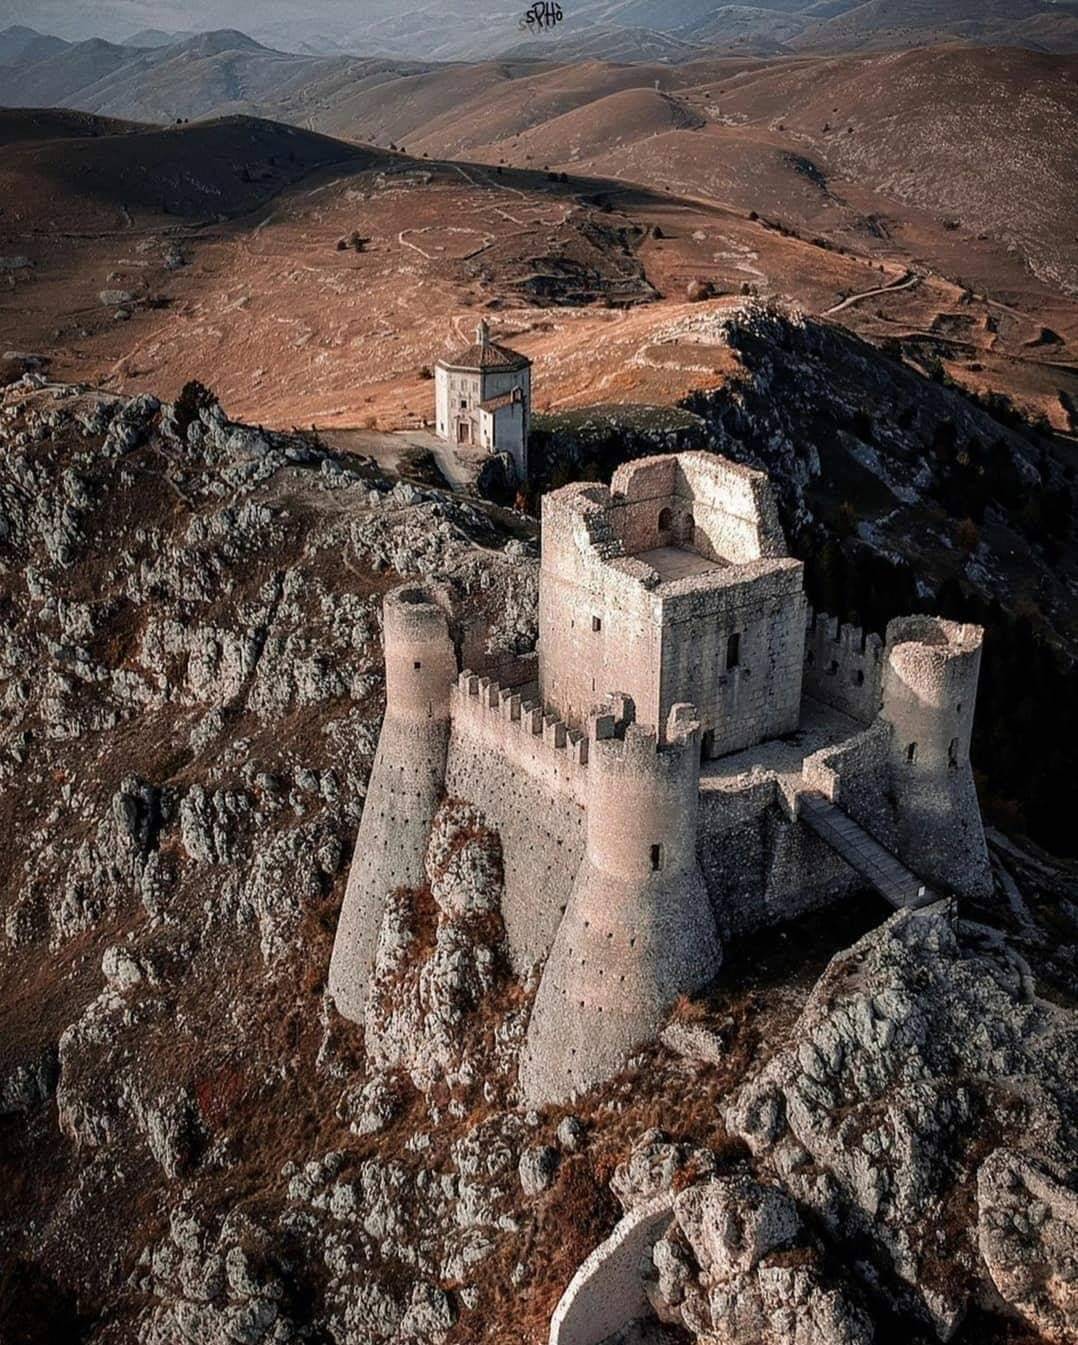 13th century Castle of Rocca Calascio, a mountaintop fortress in Abruzzo, Italy.